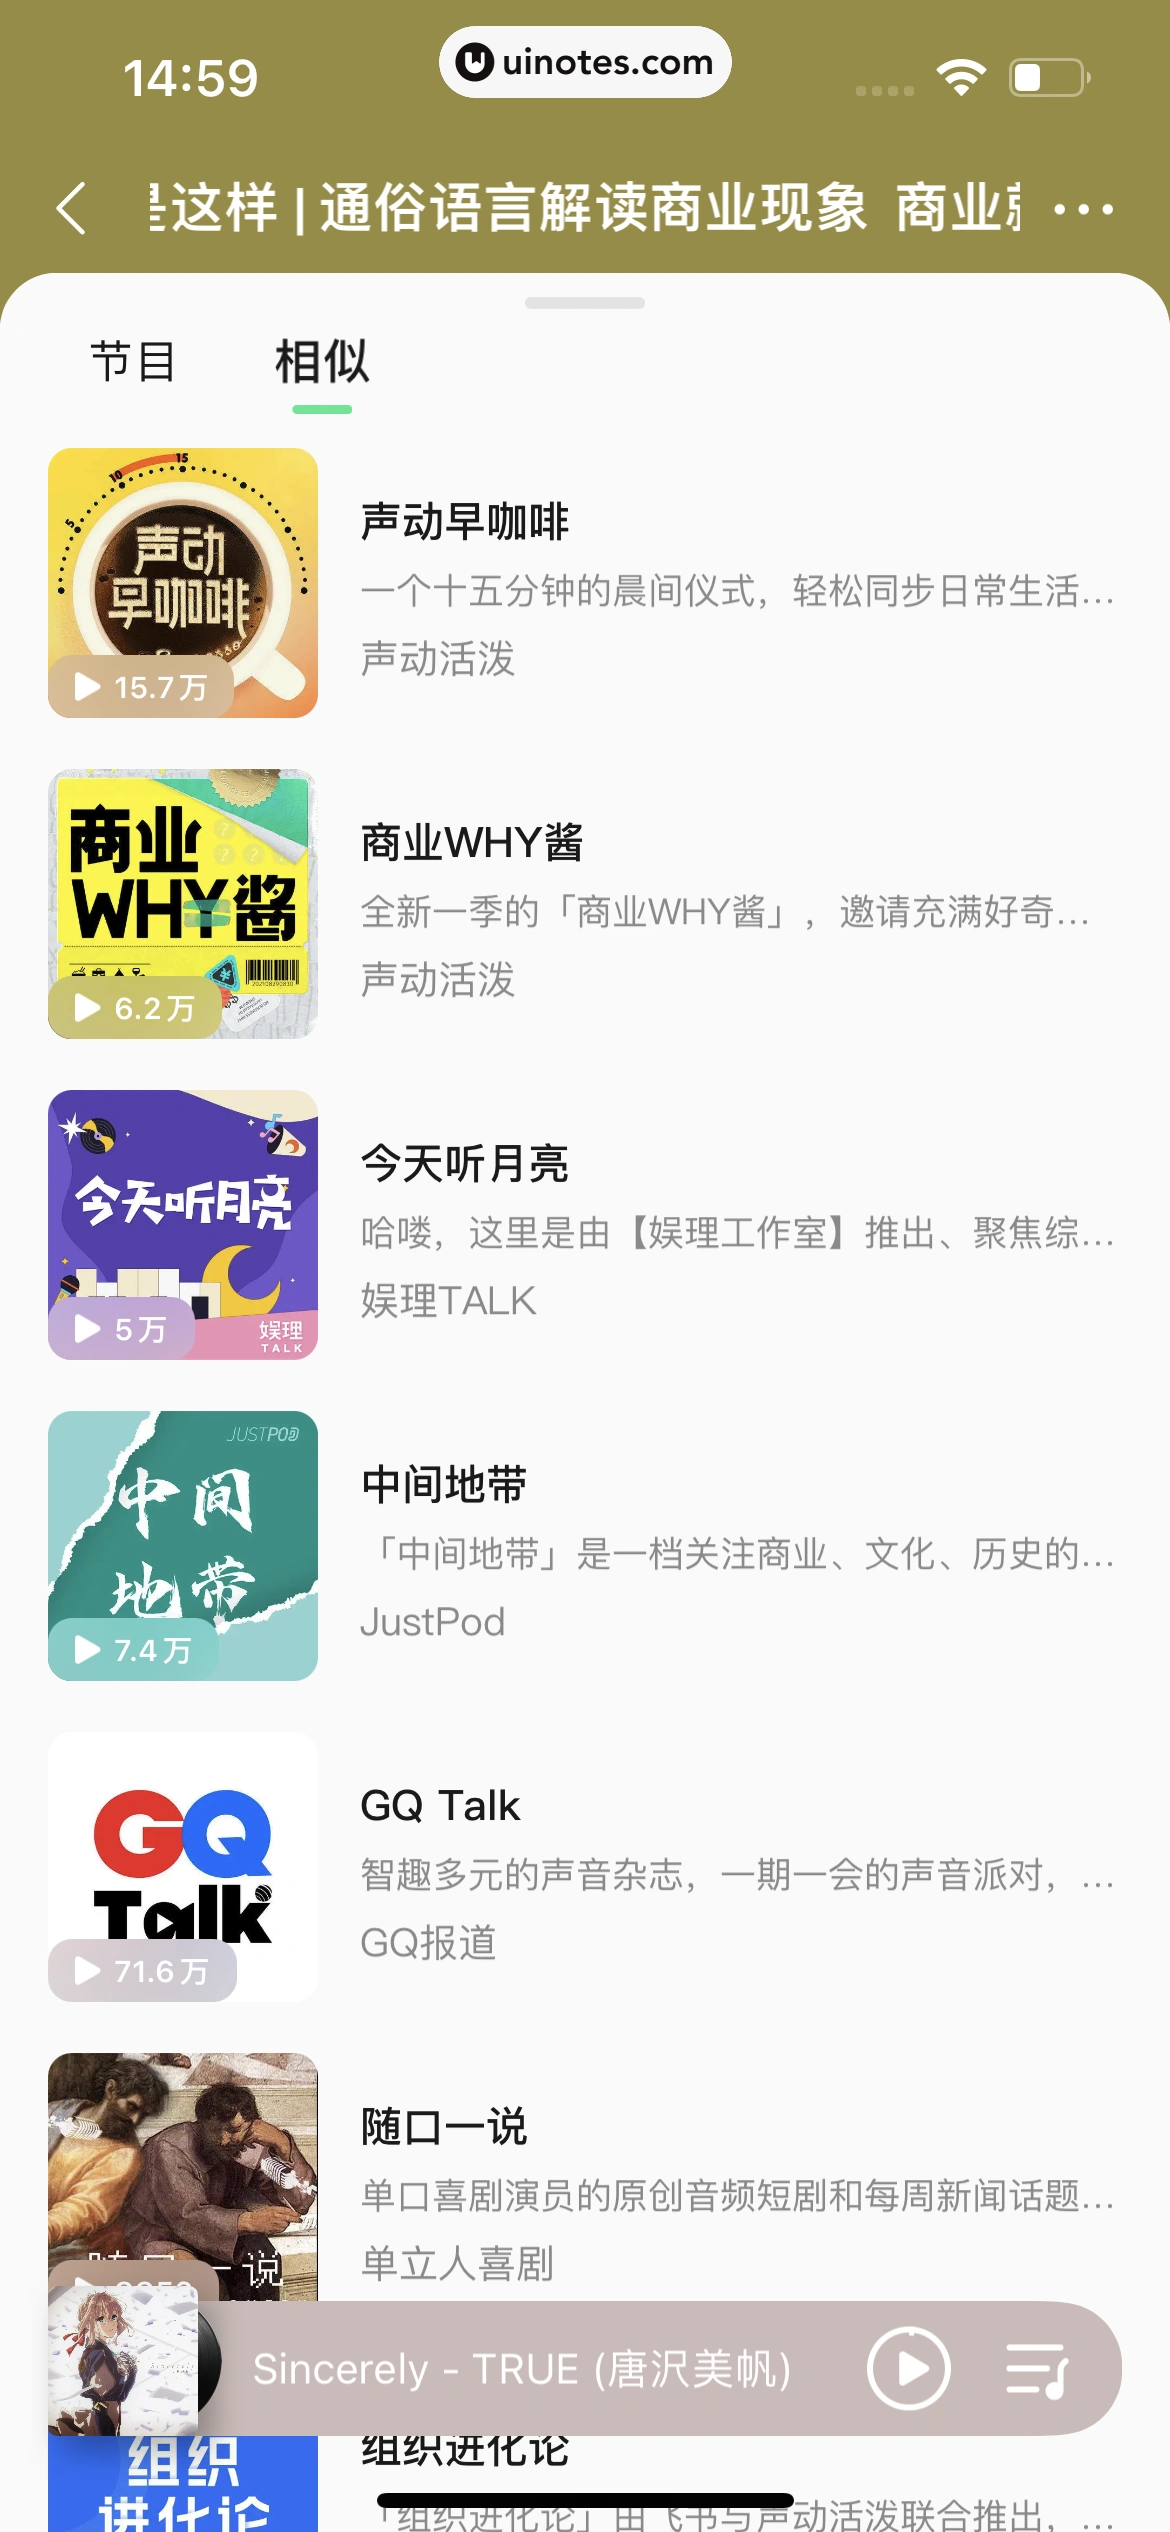 QQ音乐 App 截图 261 - UI Notes